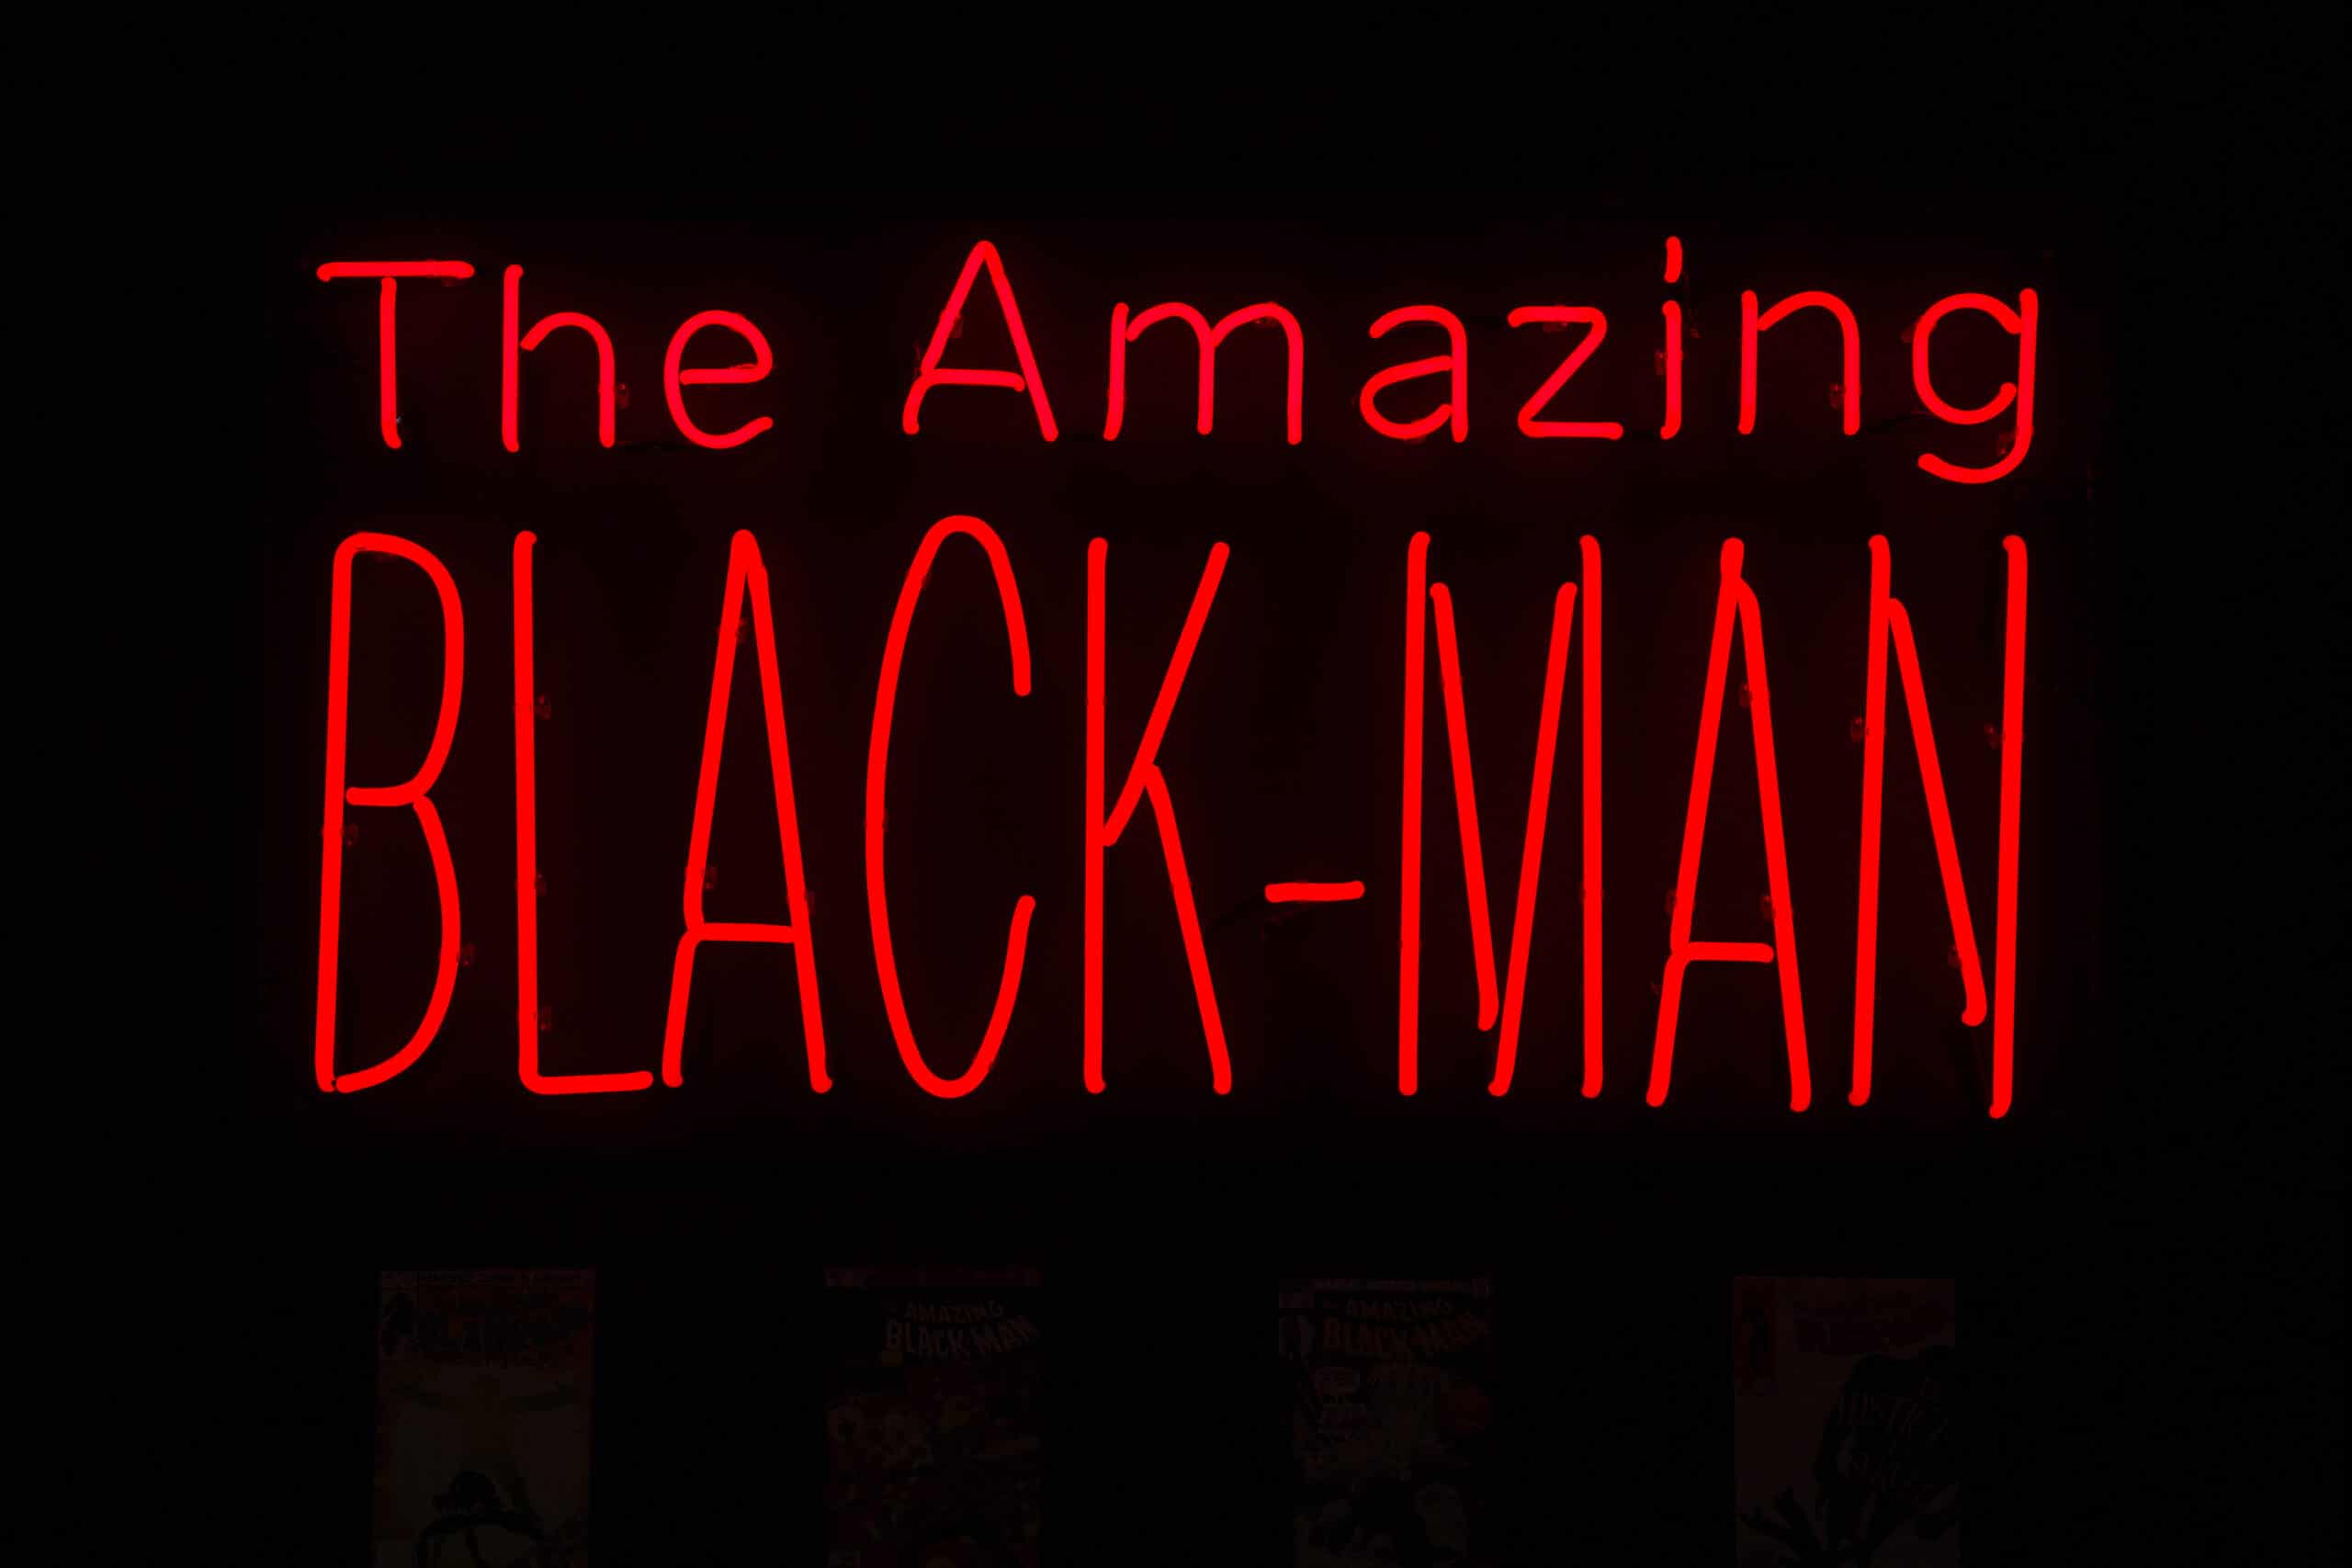 5301Kumasi J Barnett. The Amazing Black-Man. 2018. Neon glass. 750 x 150 cm